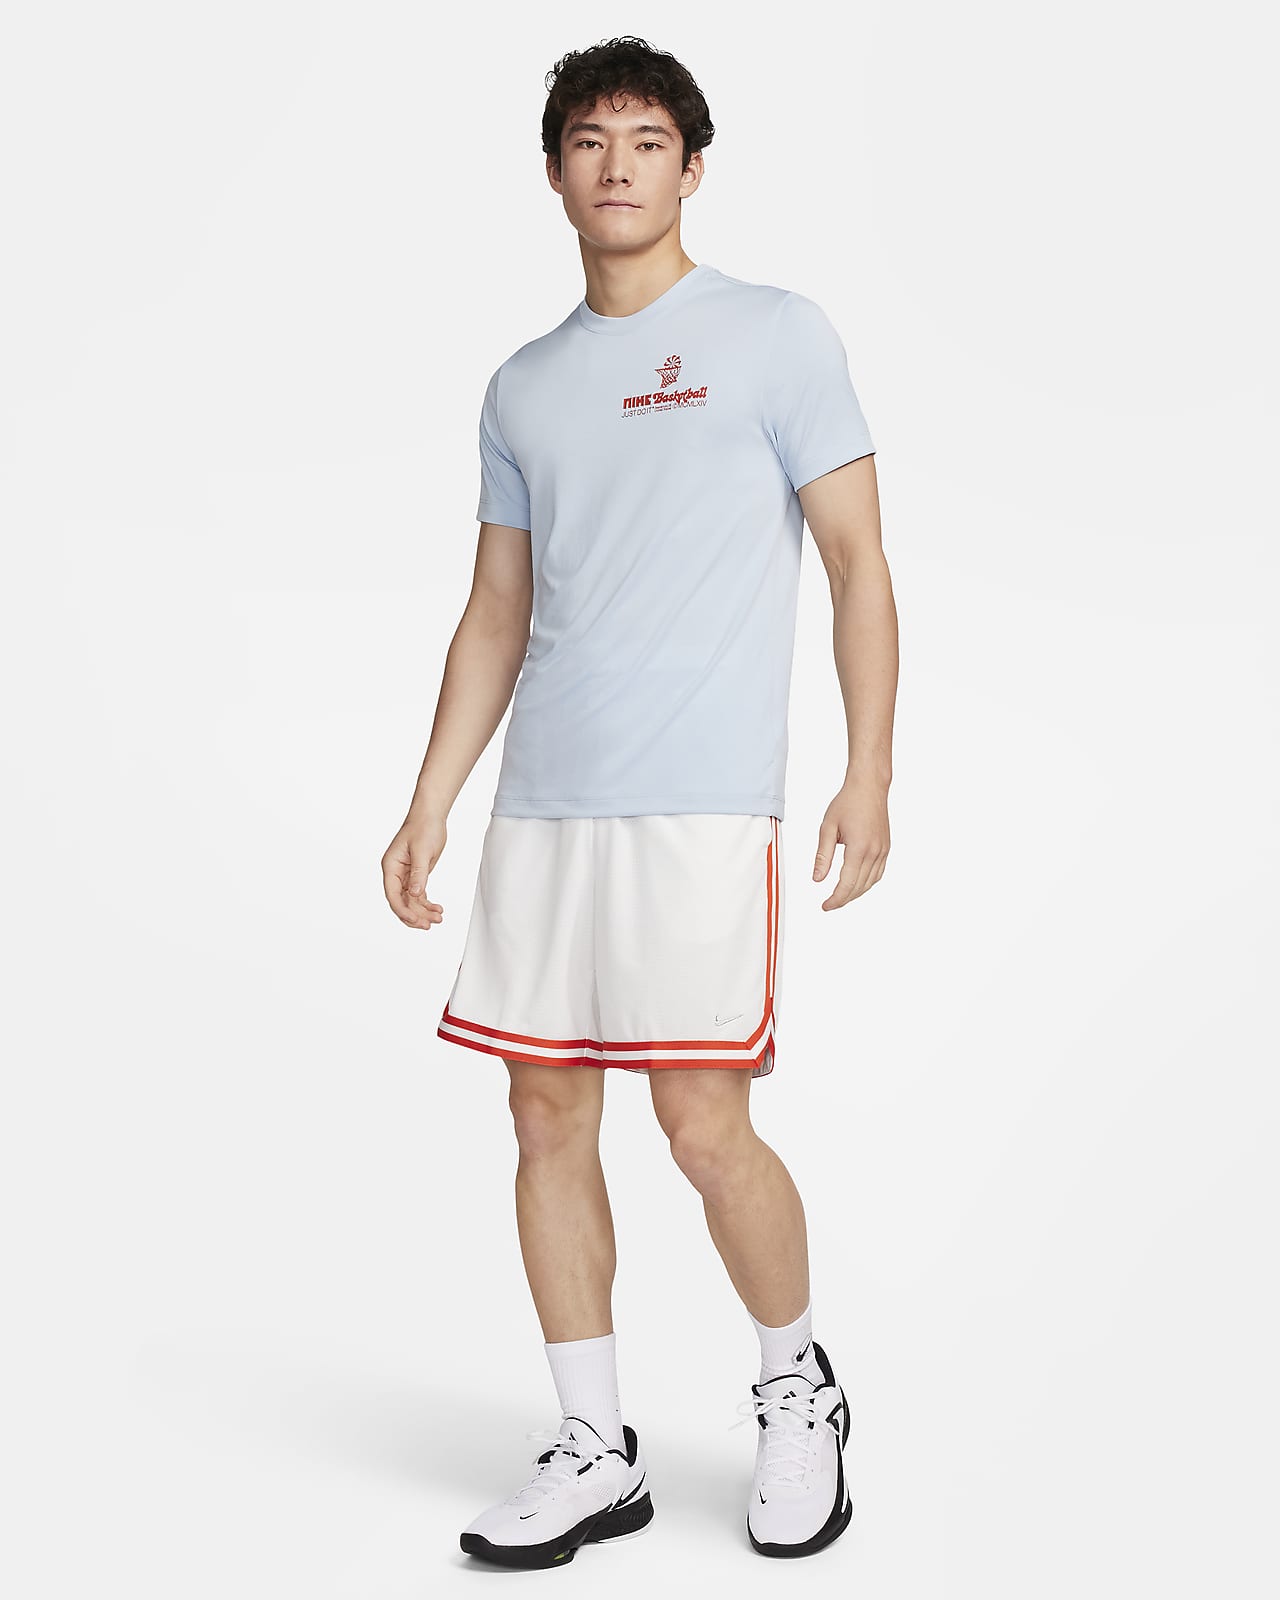 Vintage Striped Logo Mens Mesh Basketball Shorts With Pockets